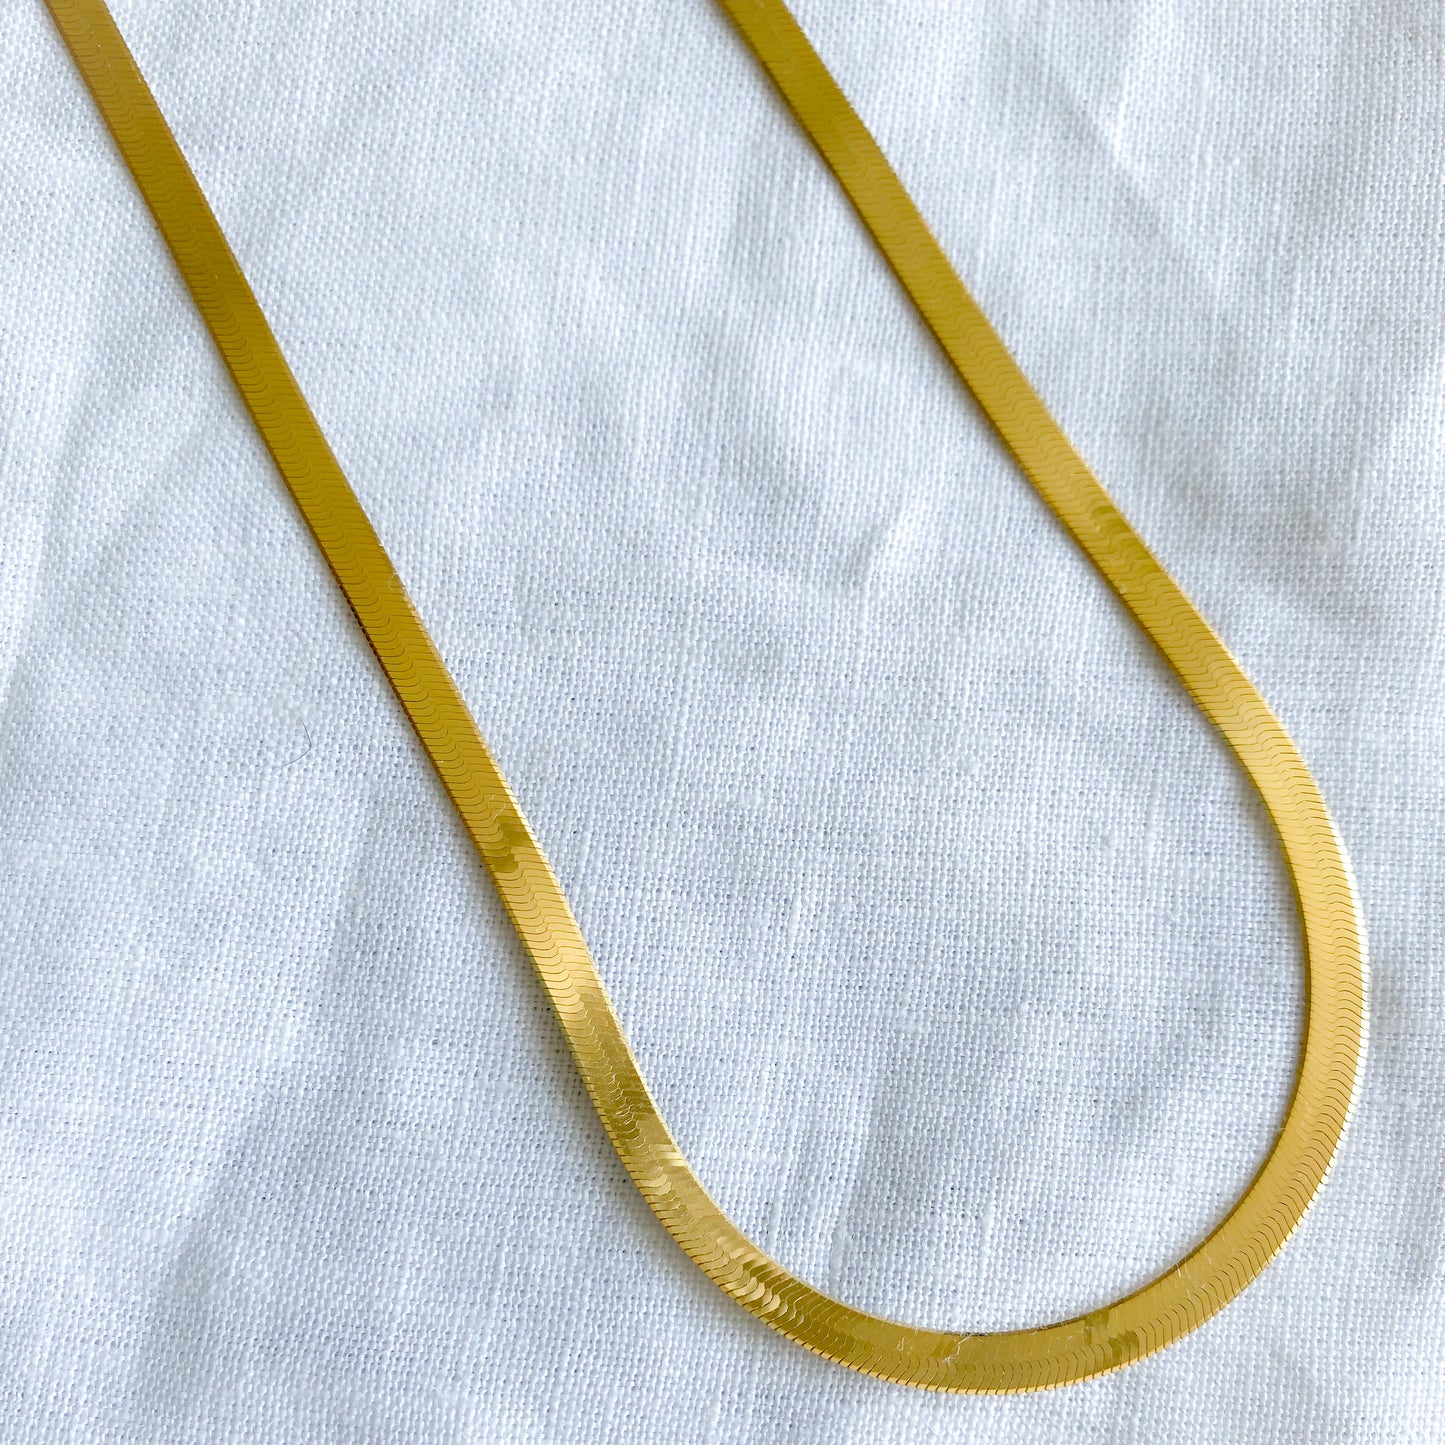 Baldwyn Gold 14KT Herringbone Chain Necklace - BelleStyle 18 inch chain necklace unisex precious metal